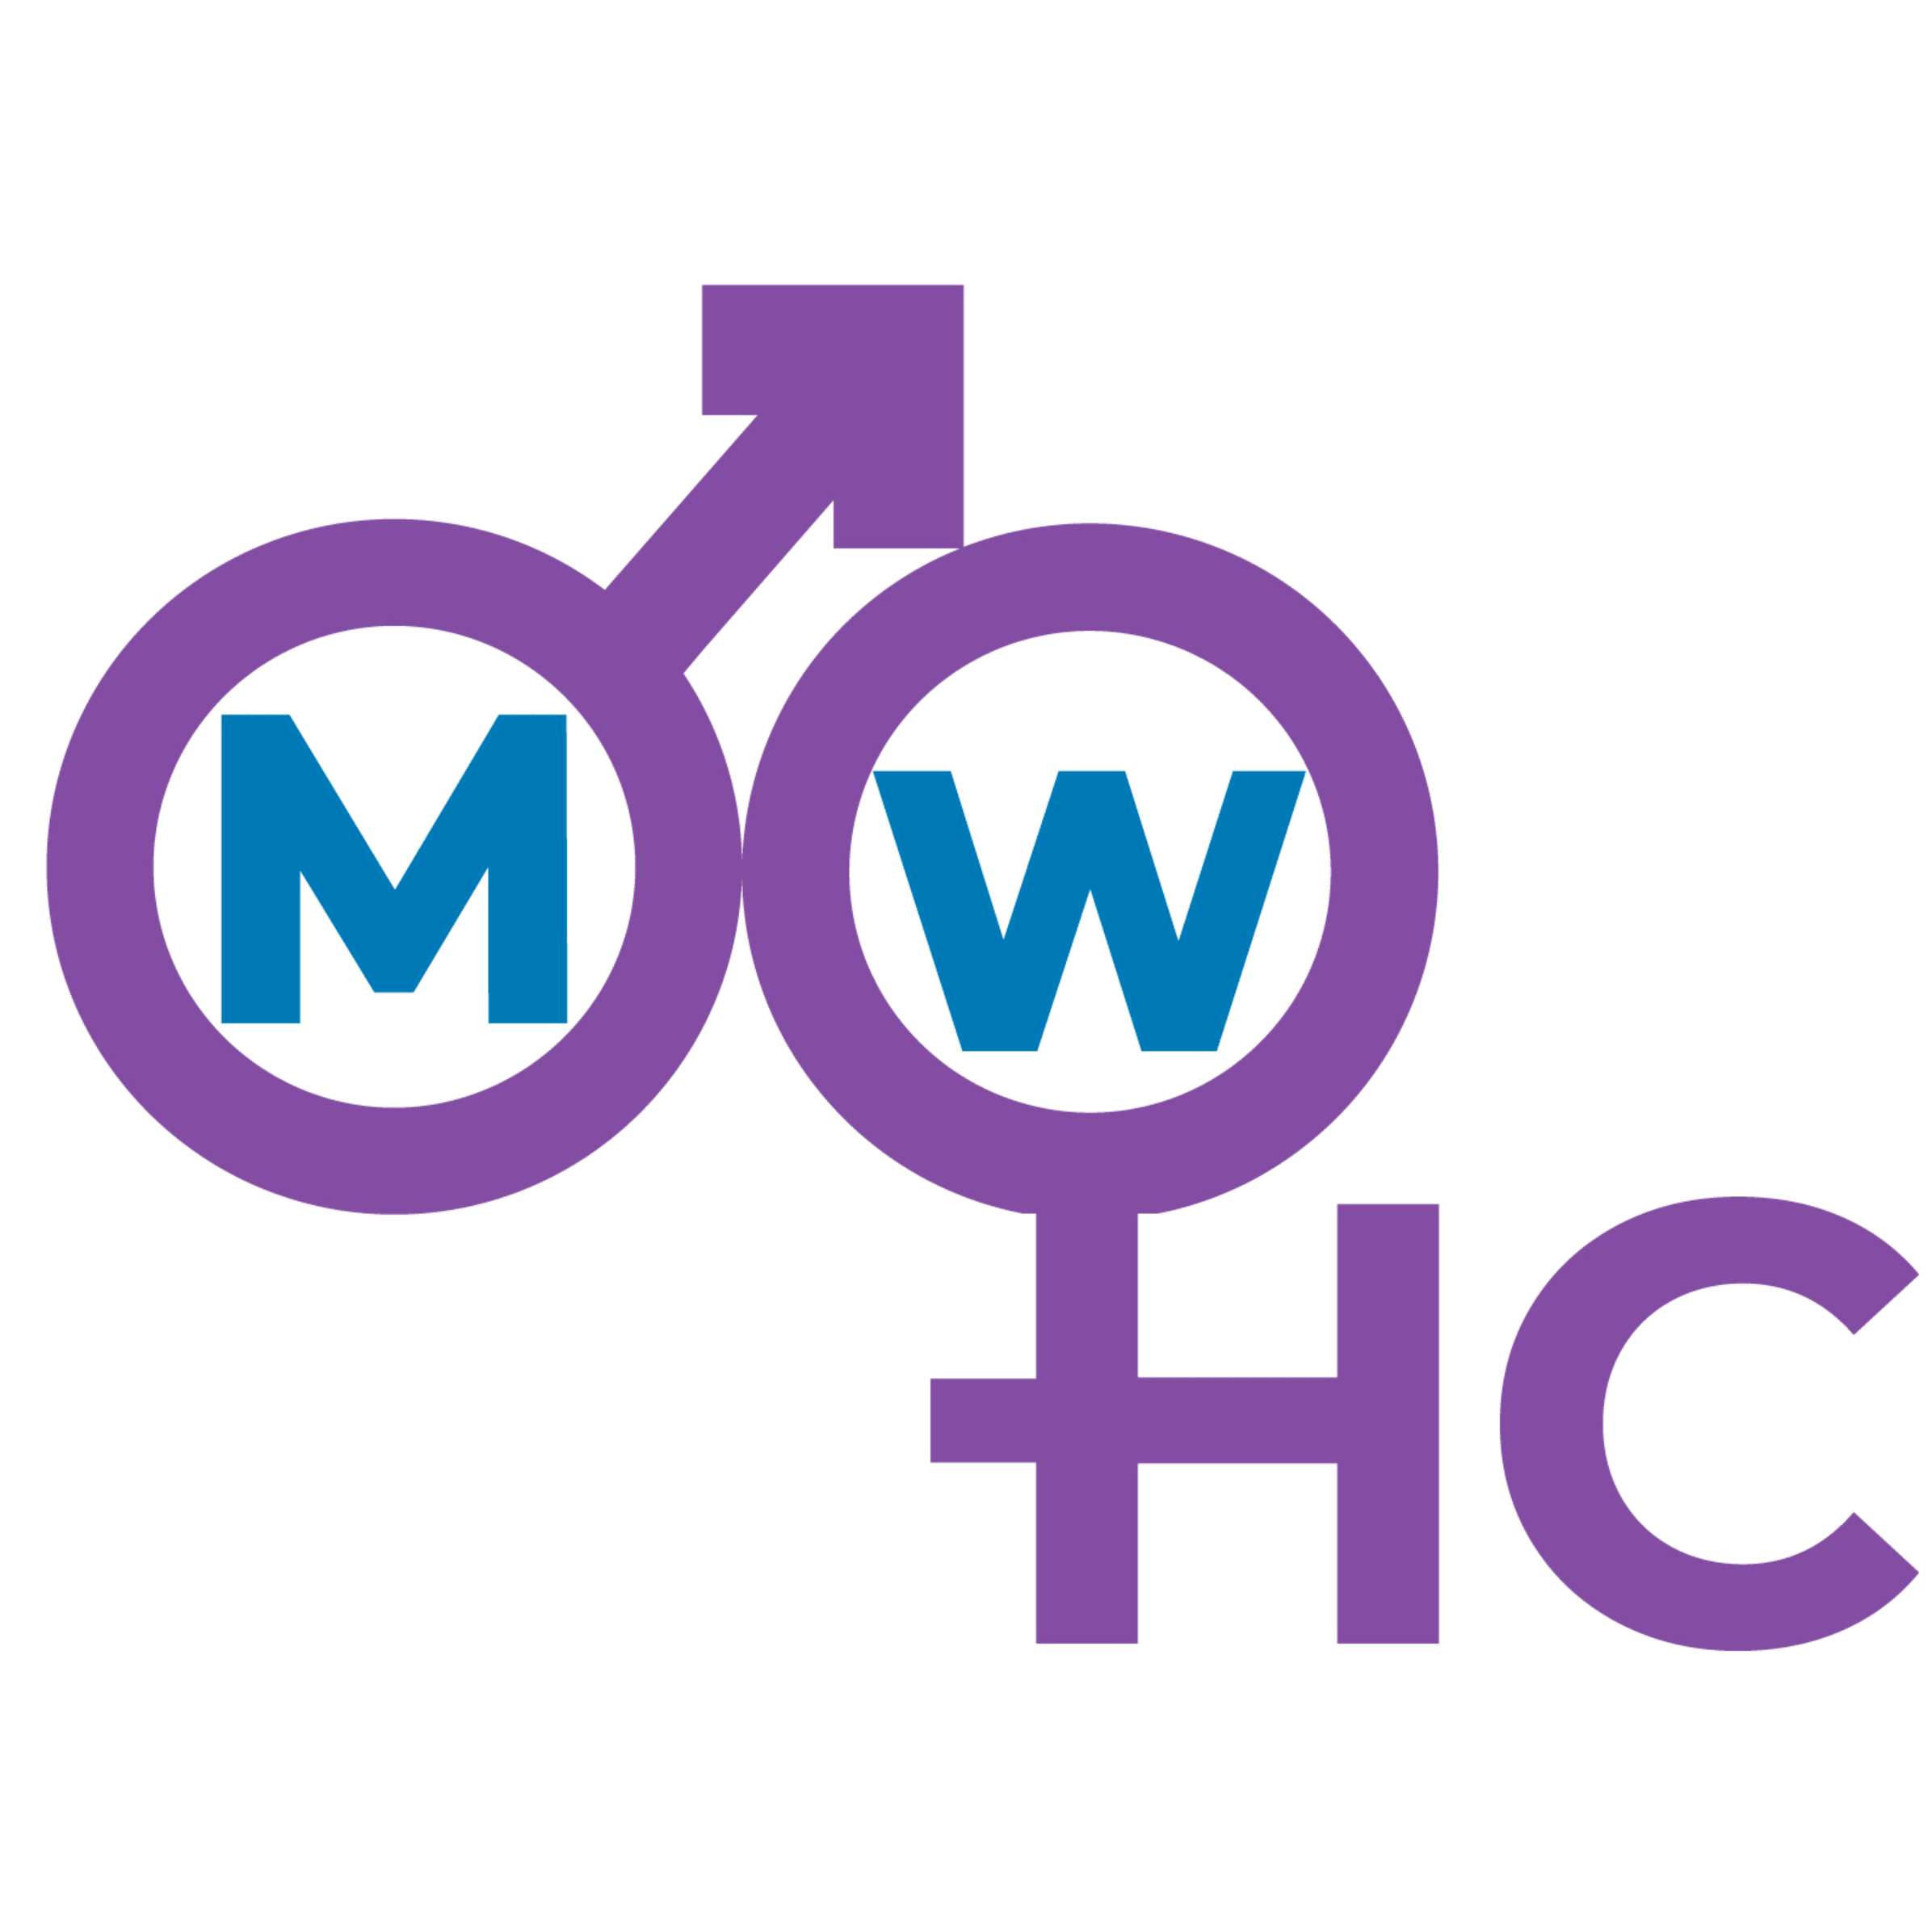 Midwest Hormone Centers